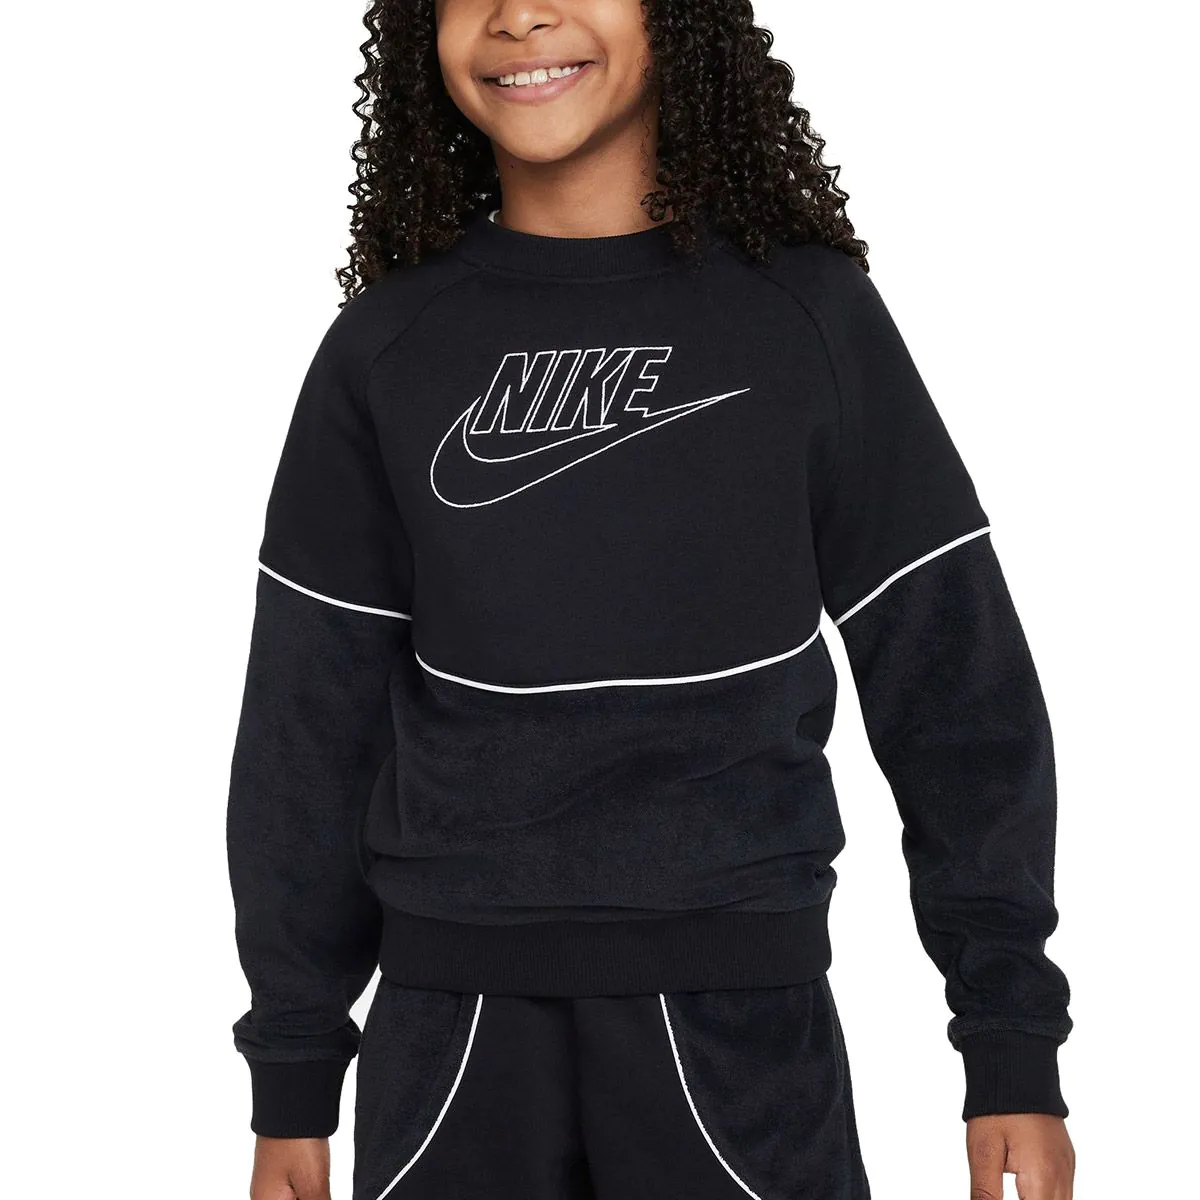 Supergünstiger Versandhandel! Nike Sportswear FD3161-010 Kids Sweatshirt Big